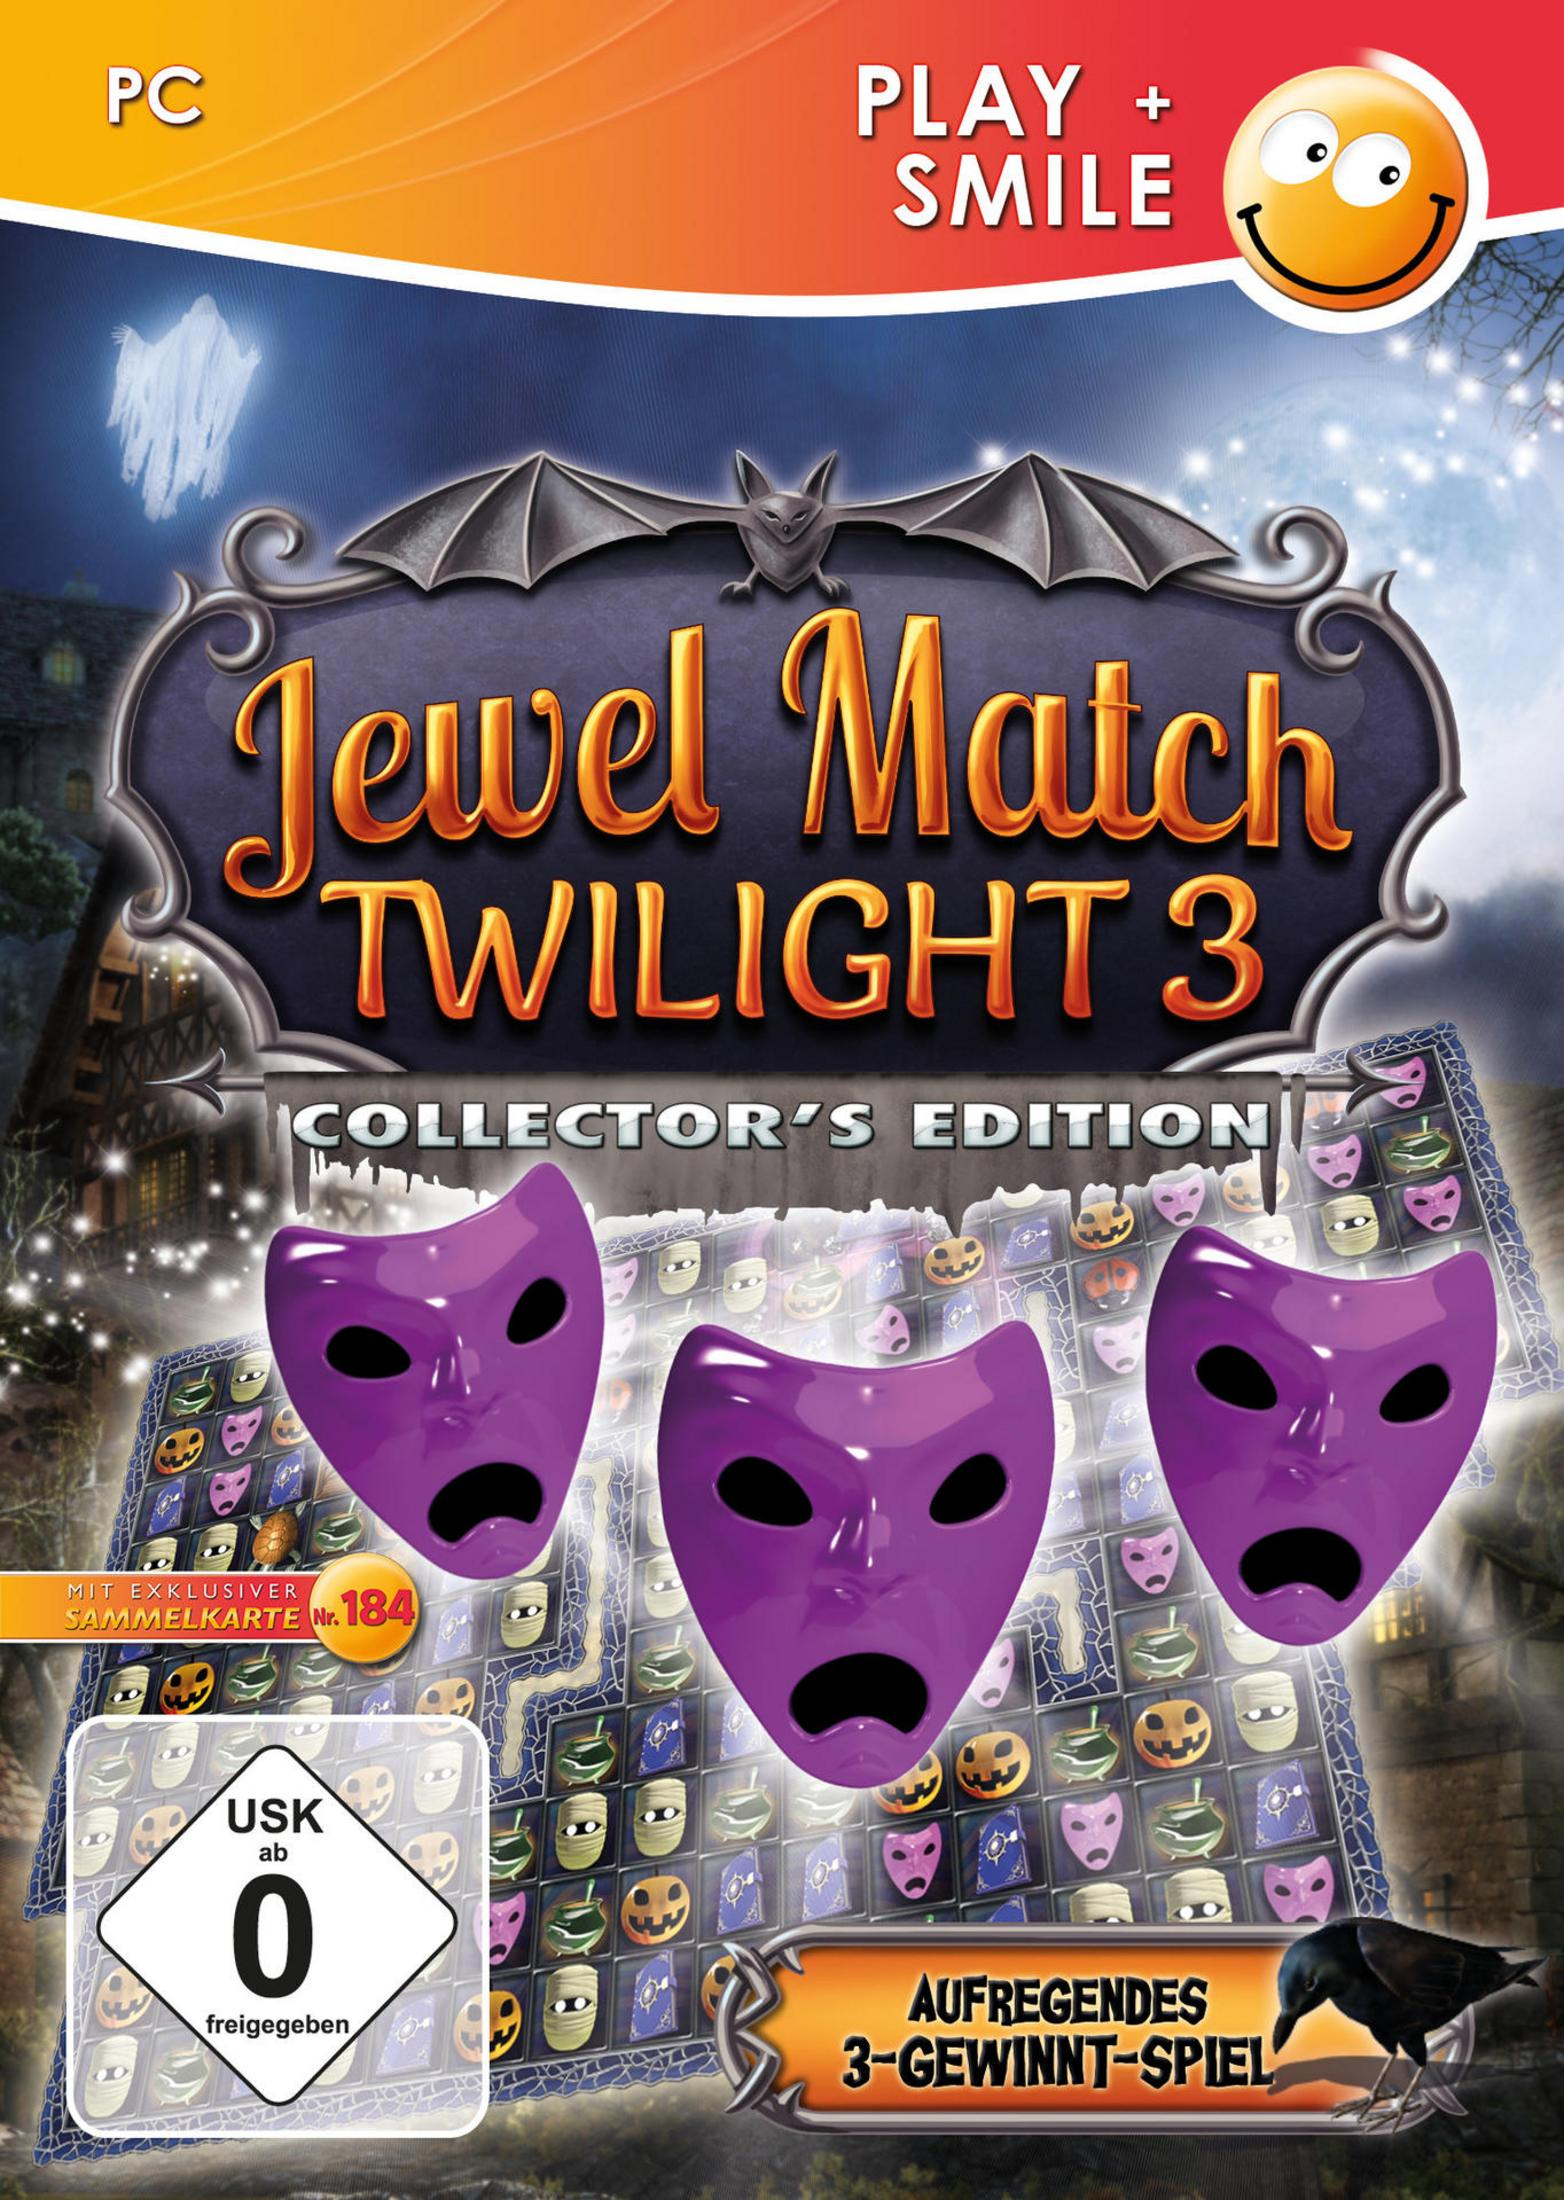 EDITION) 3 [PC] JEWEL S (COLLECTOR MATCH-TWILIGHT -